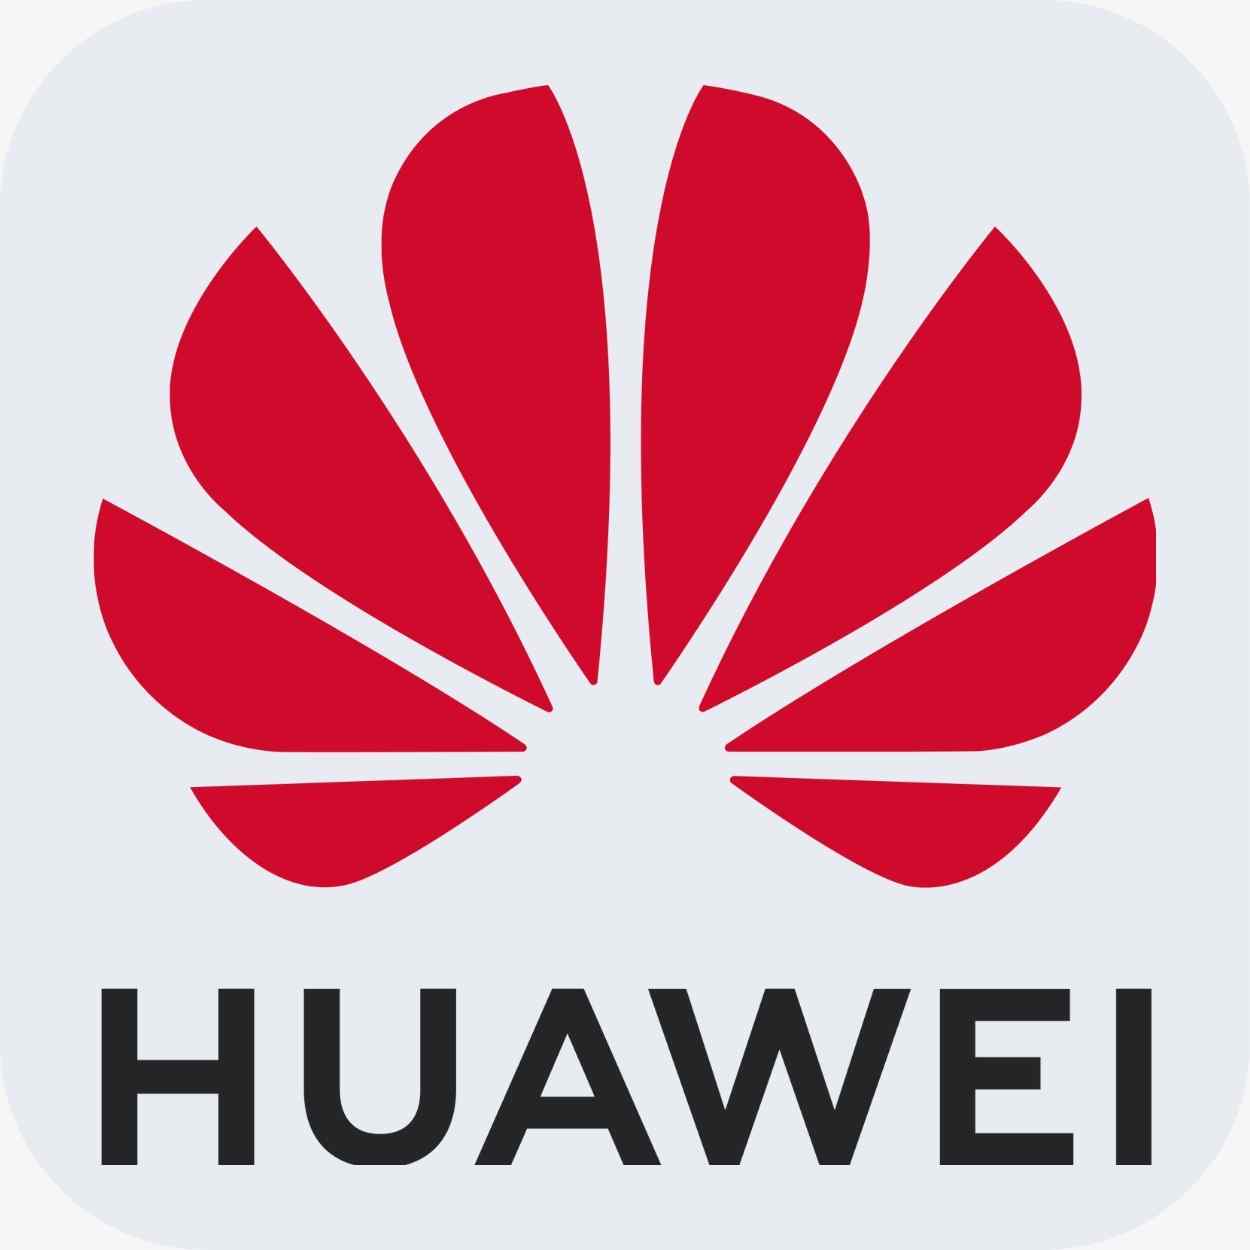 Huawei Mobile Price In Uae Huawei Huawei Mobile Huawei Phones Huawei Uae